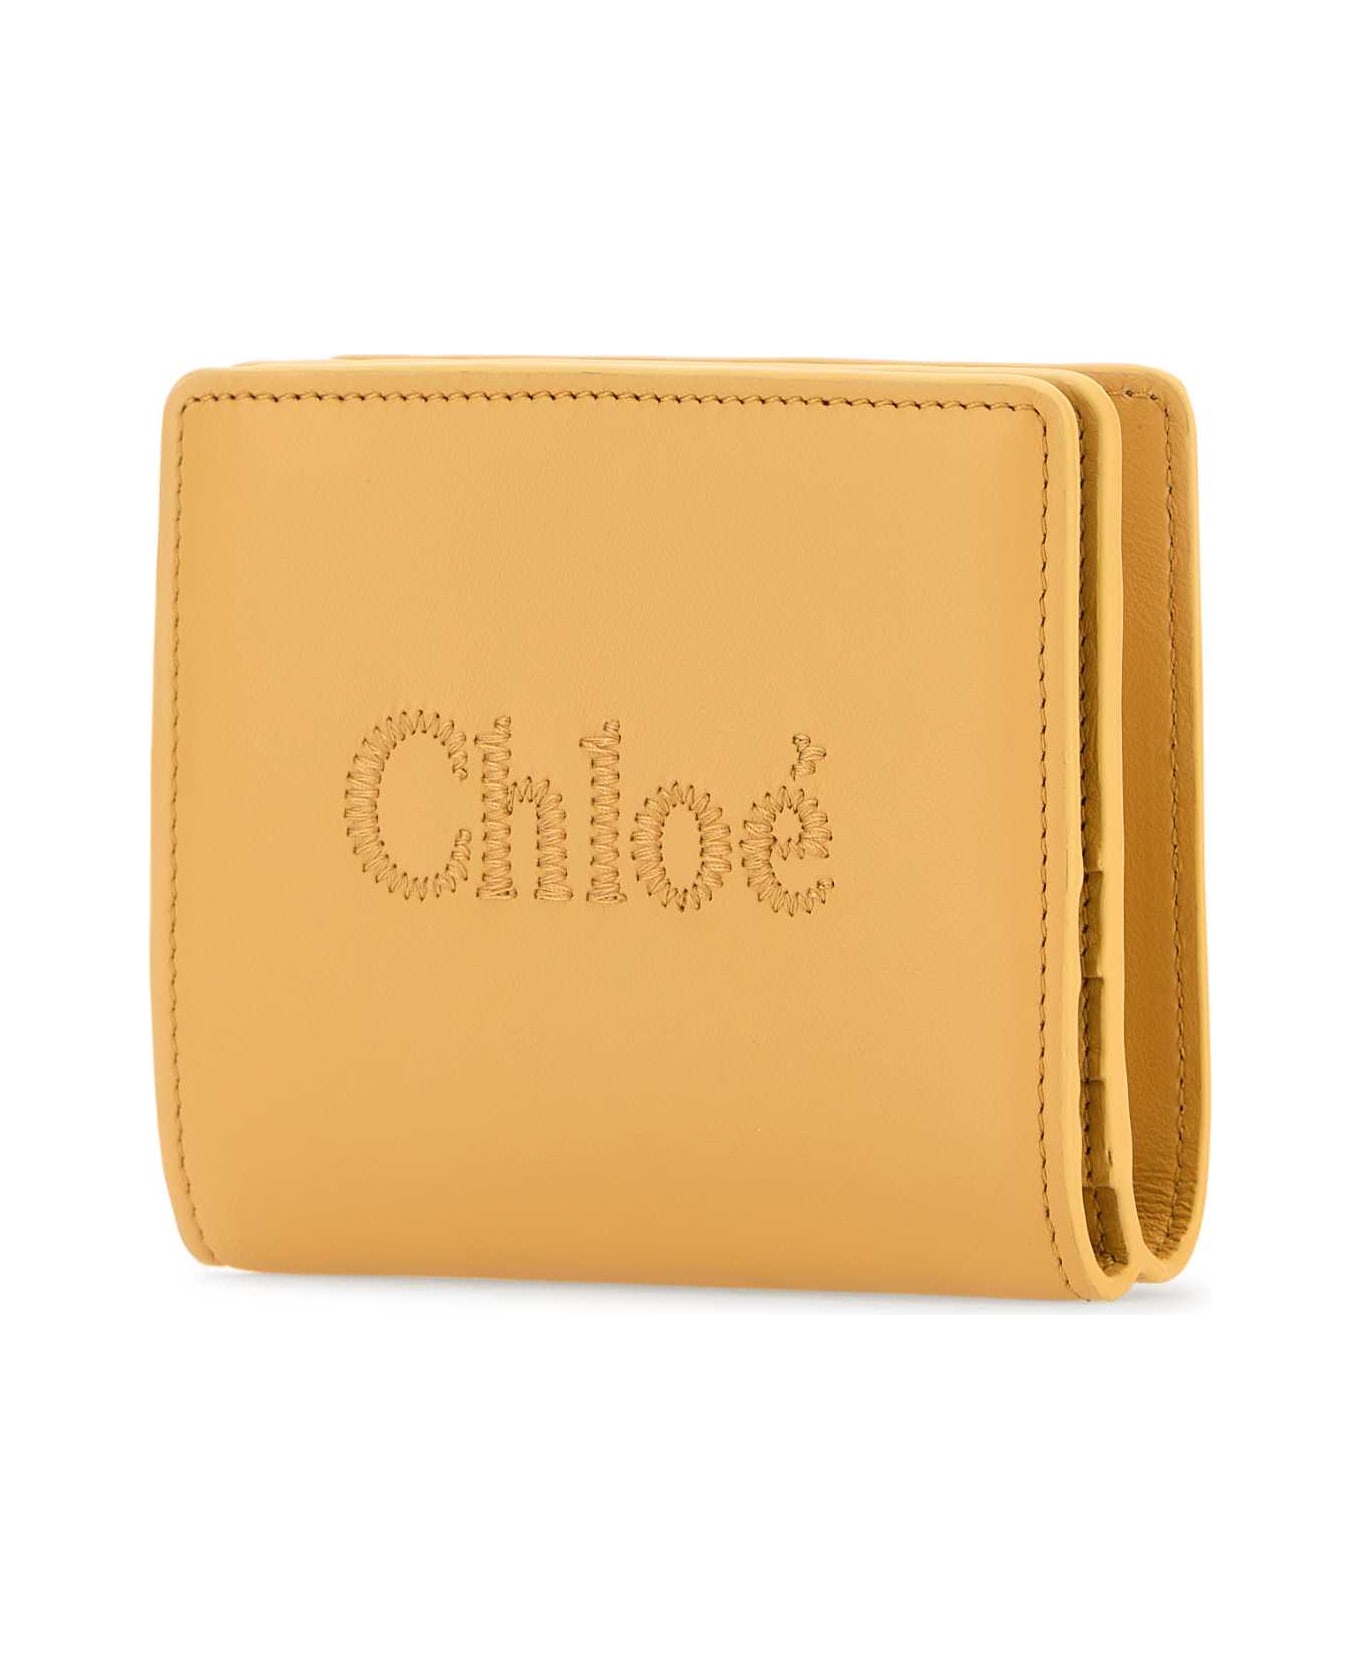 Chloé Peach Leather Wallet - HONEYGOLD